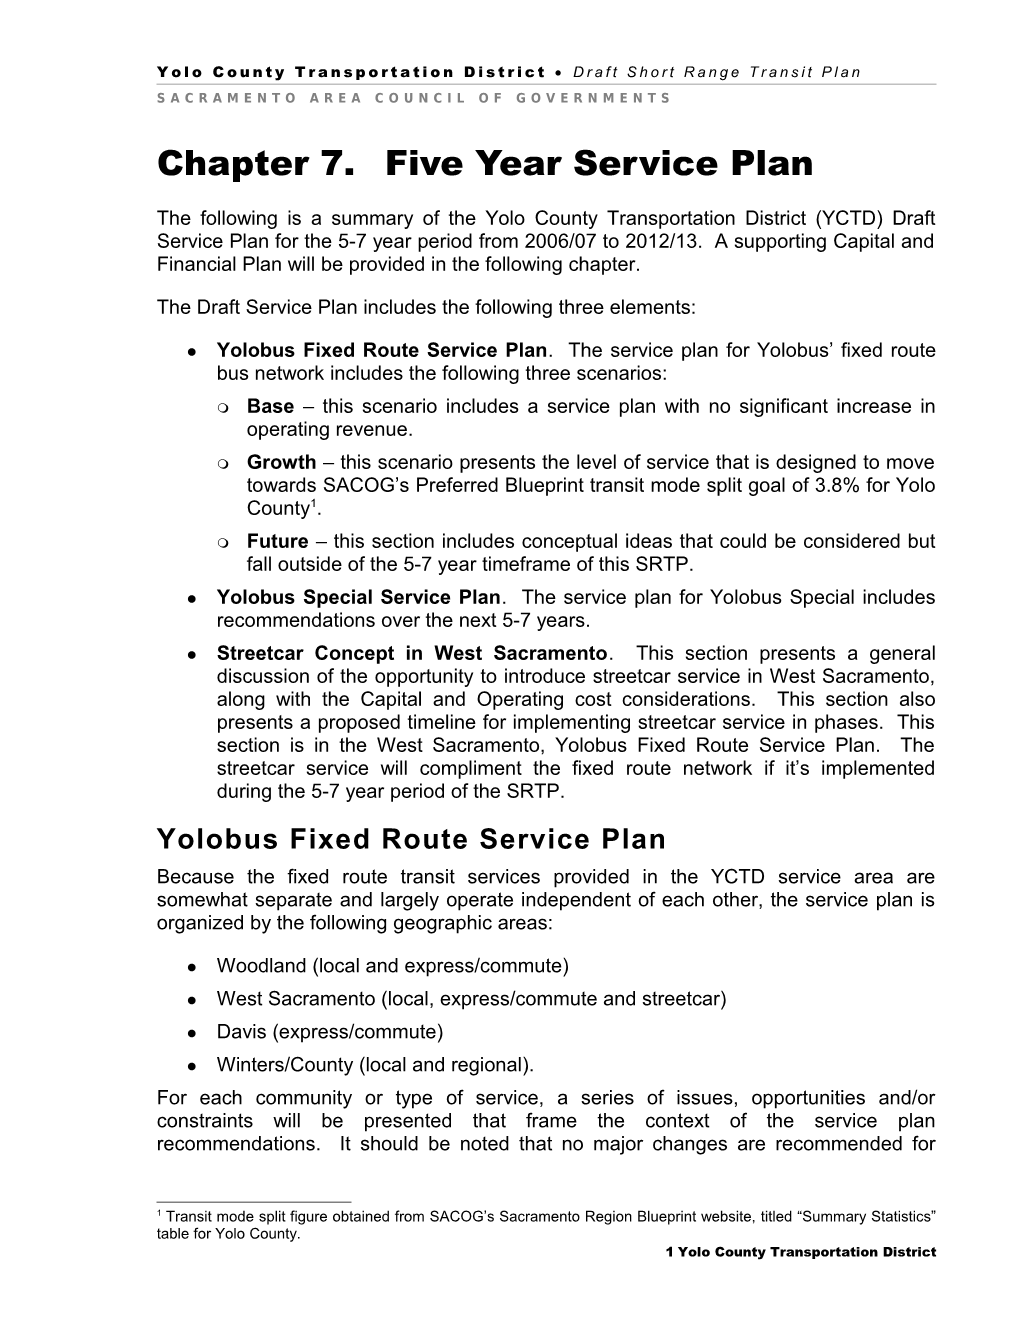 Yolo County Transportation District Draft Short Range Transit Plan